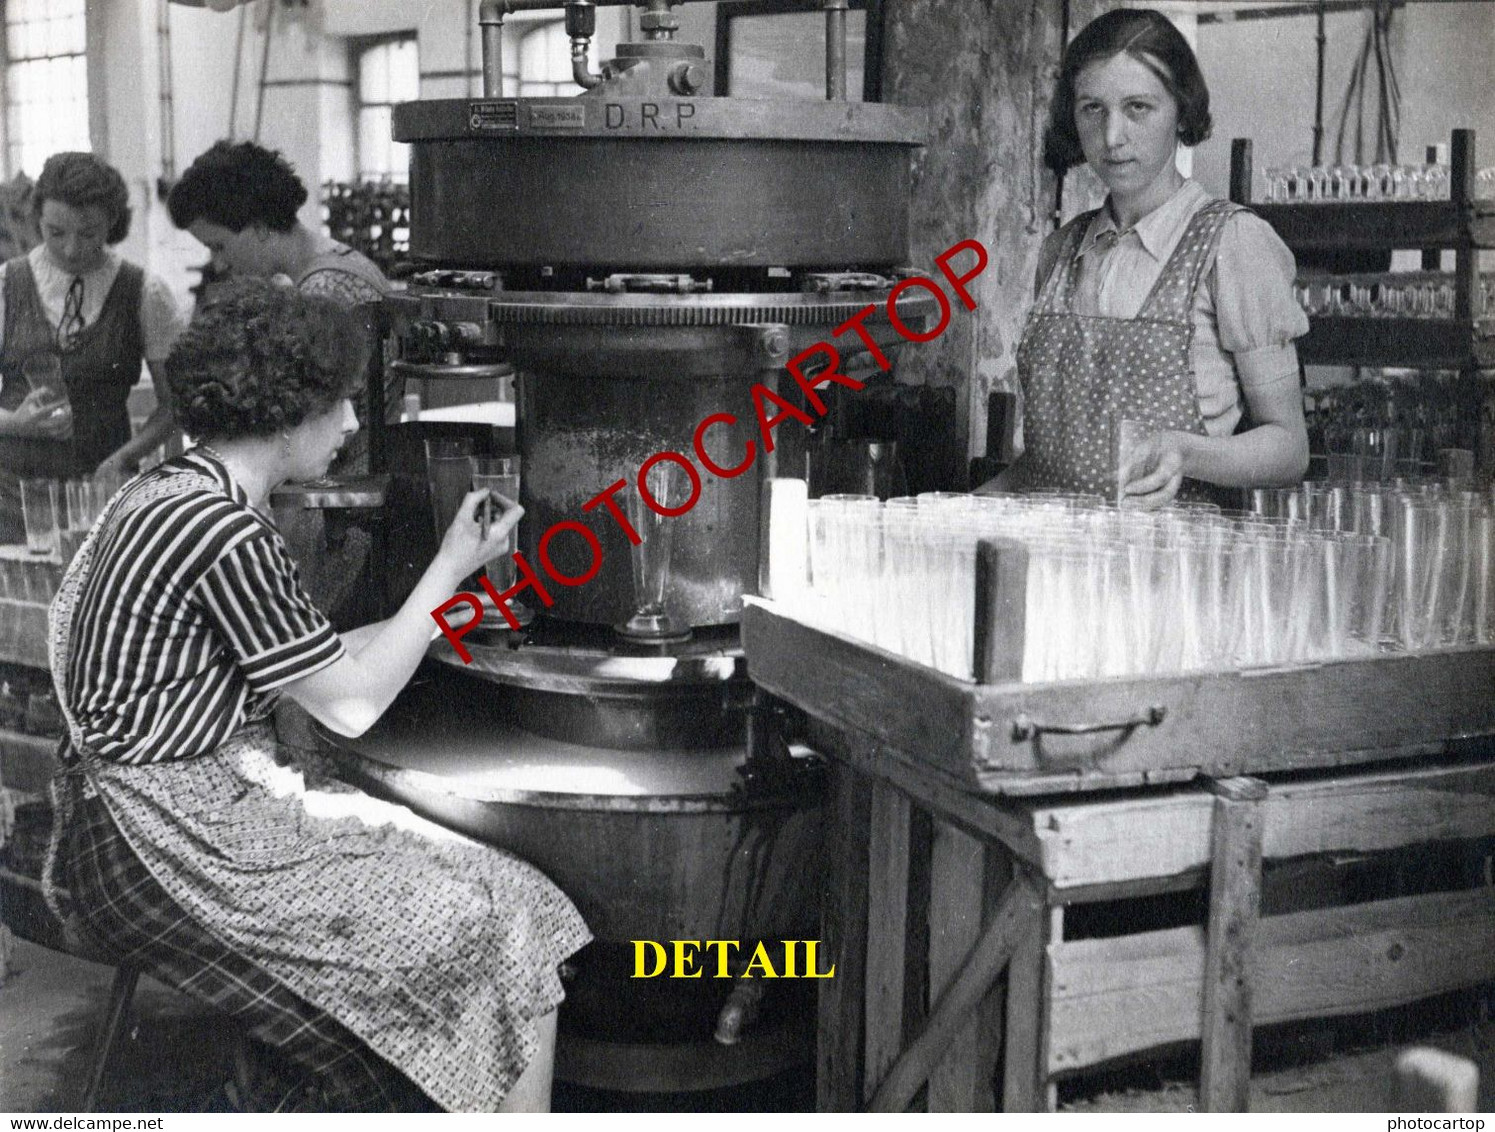 OBERHAUSEN-Album-Glasfabrik FUNCKE&BECKER-38 geklebte FOTOS-1939-Werksaufnahmen-TECHNIK-Industrie-Verrerie-